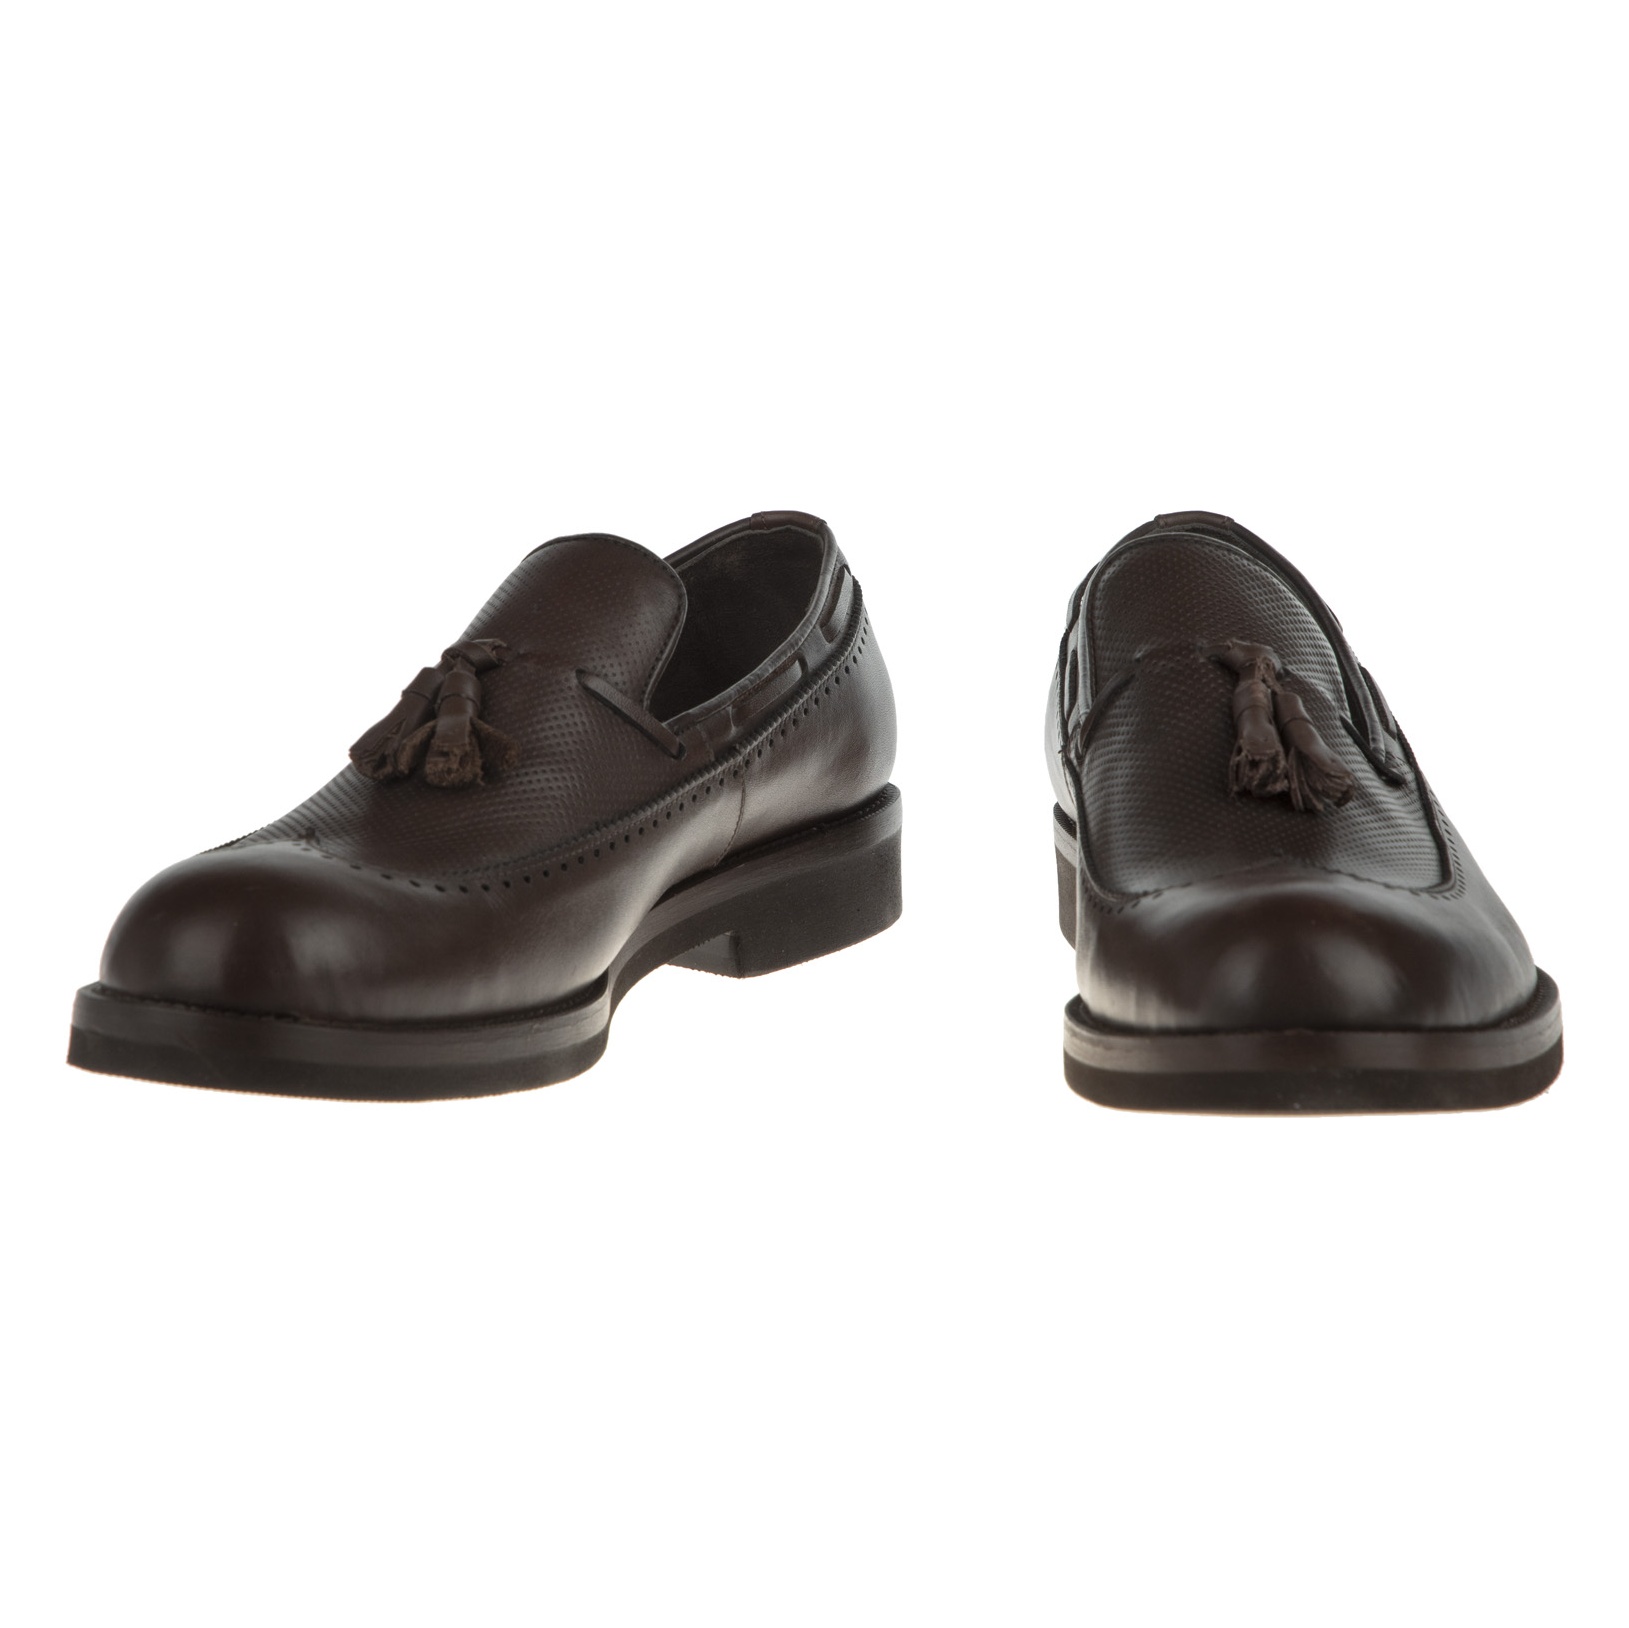 کفش مردانه بلوط مدل 7184A503-104 - قهوه ای - 5